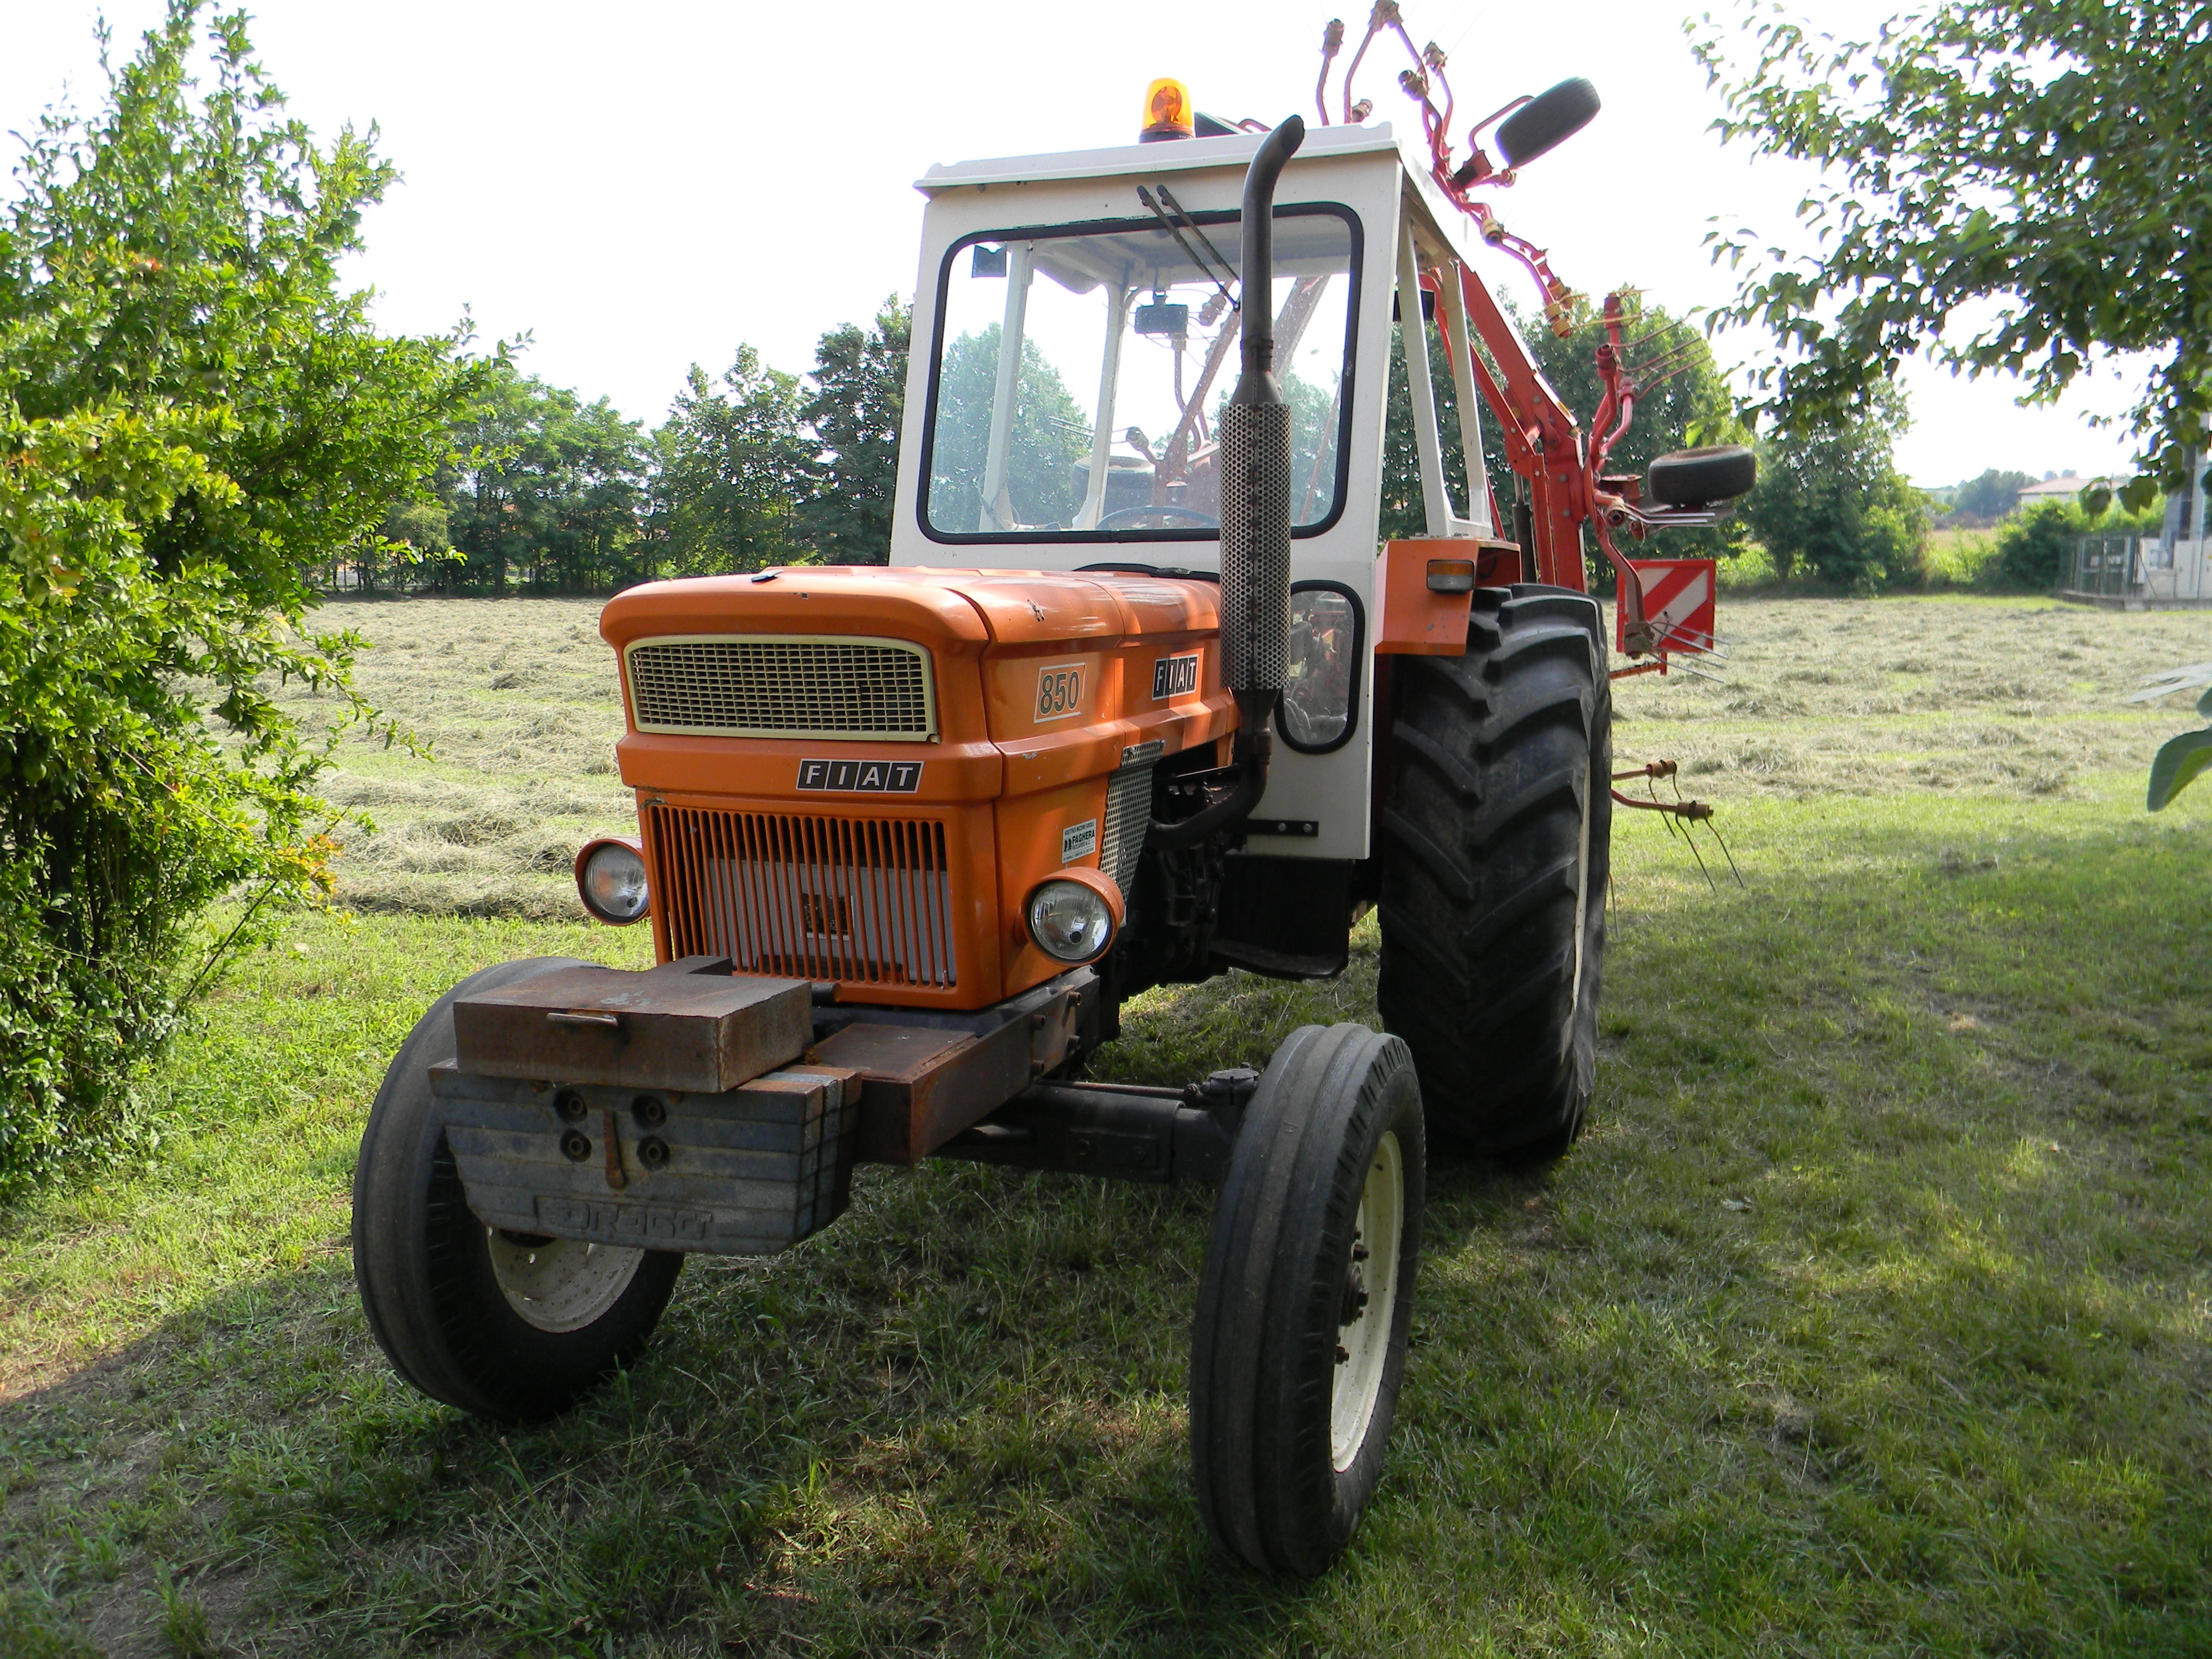 File:Fiat tractor 850.JPG - Wikimedia Commons